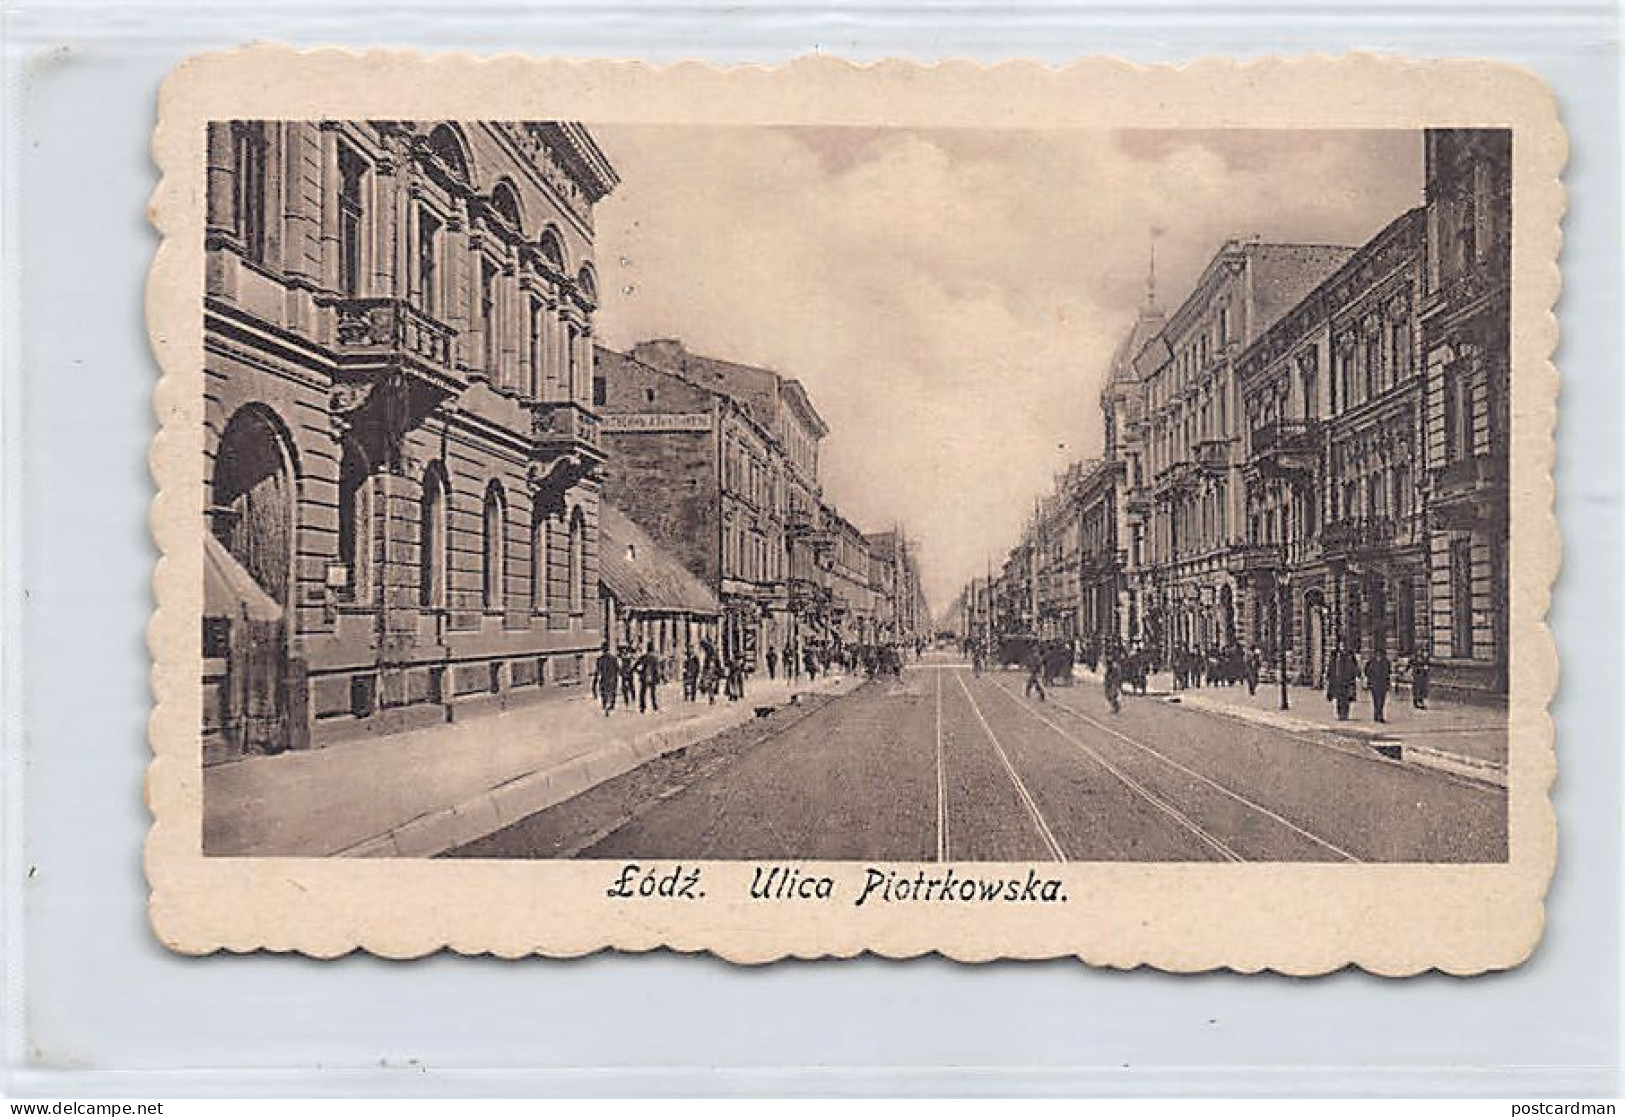 Poland - ŁÓDŹ - Ulica Piotrkowska - Poland